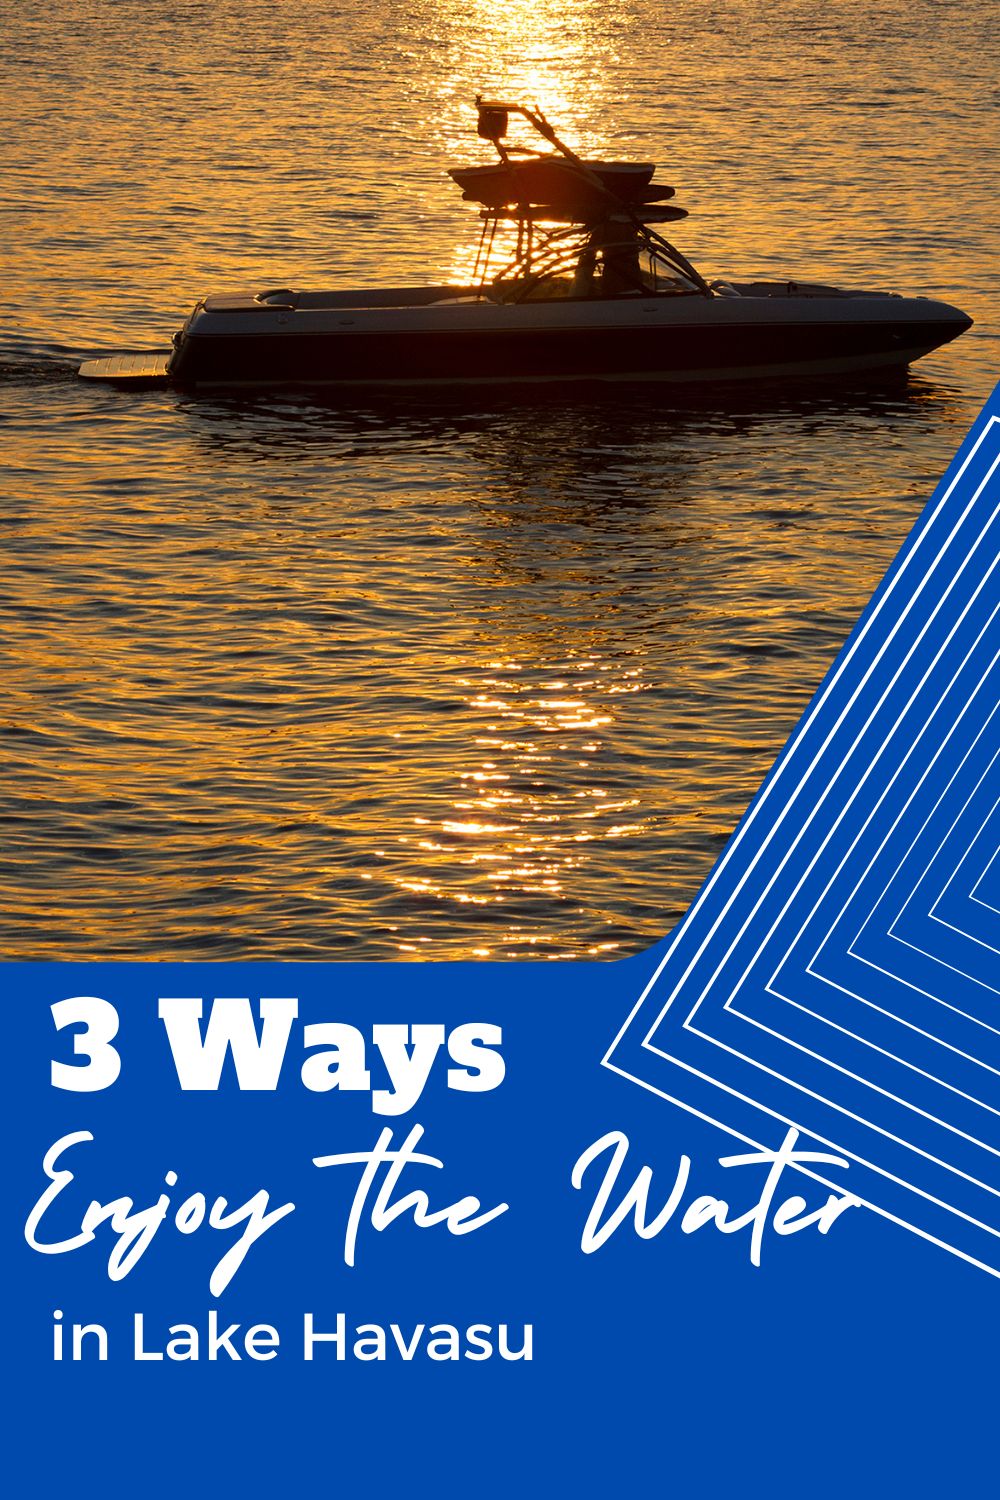 3 Ways to Enjoy the Water in Lake Havasu